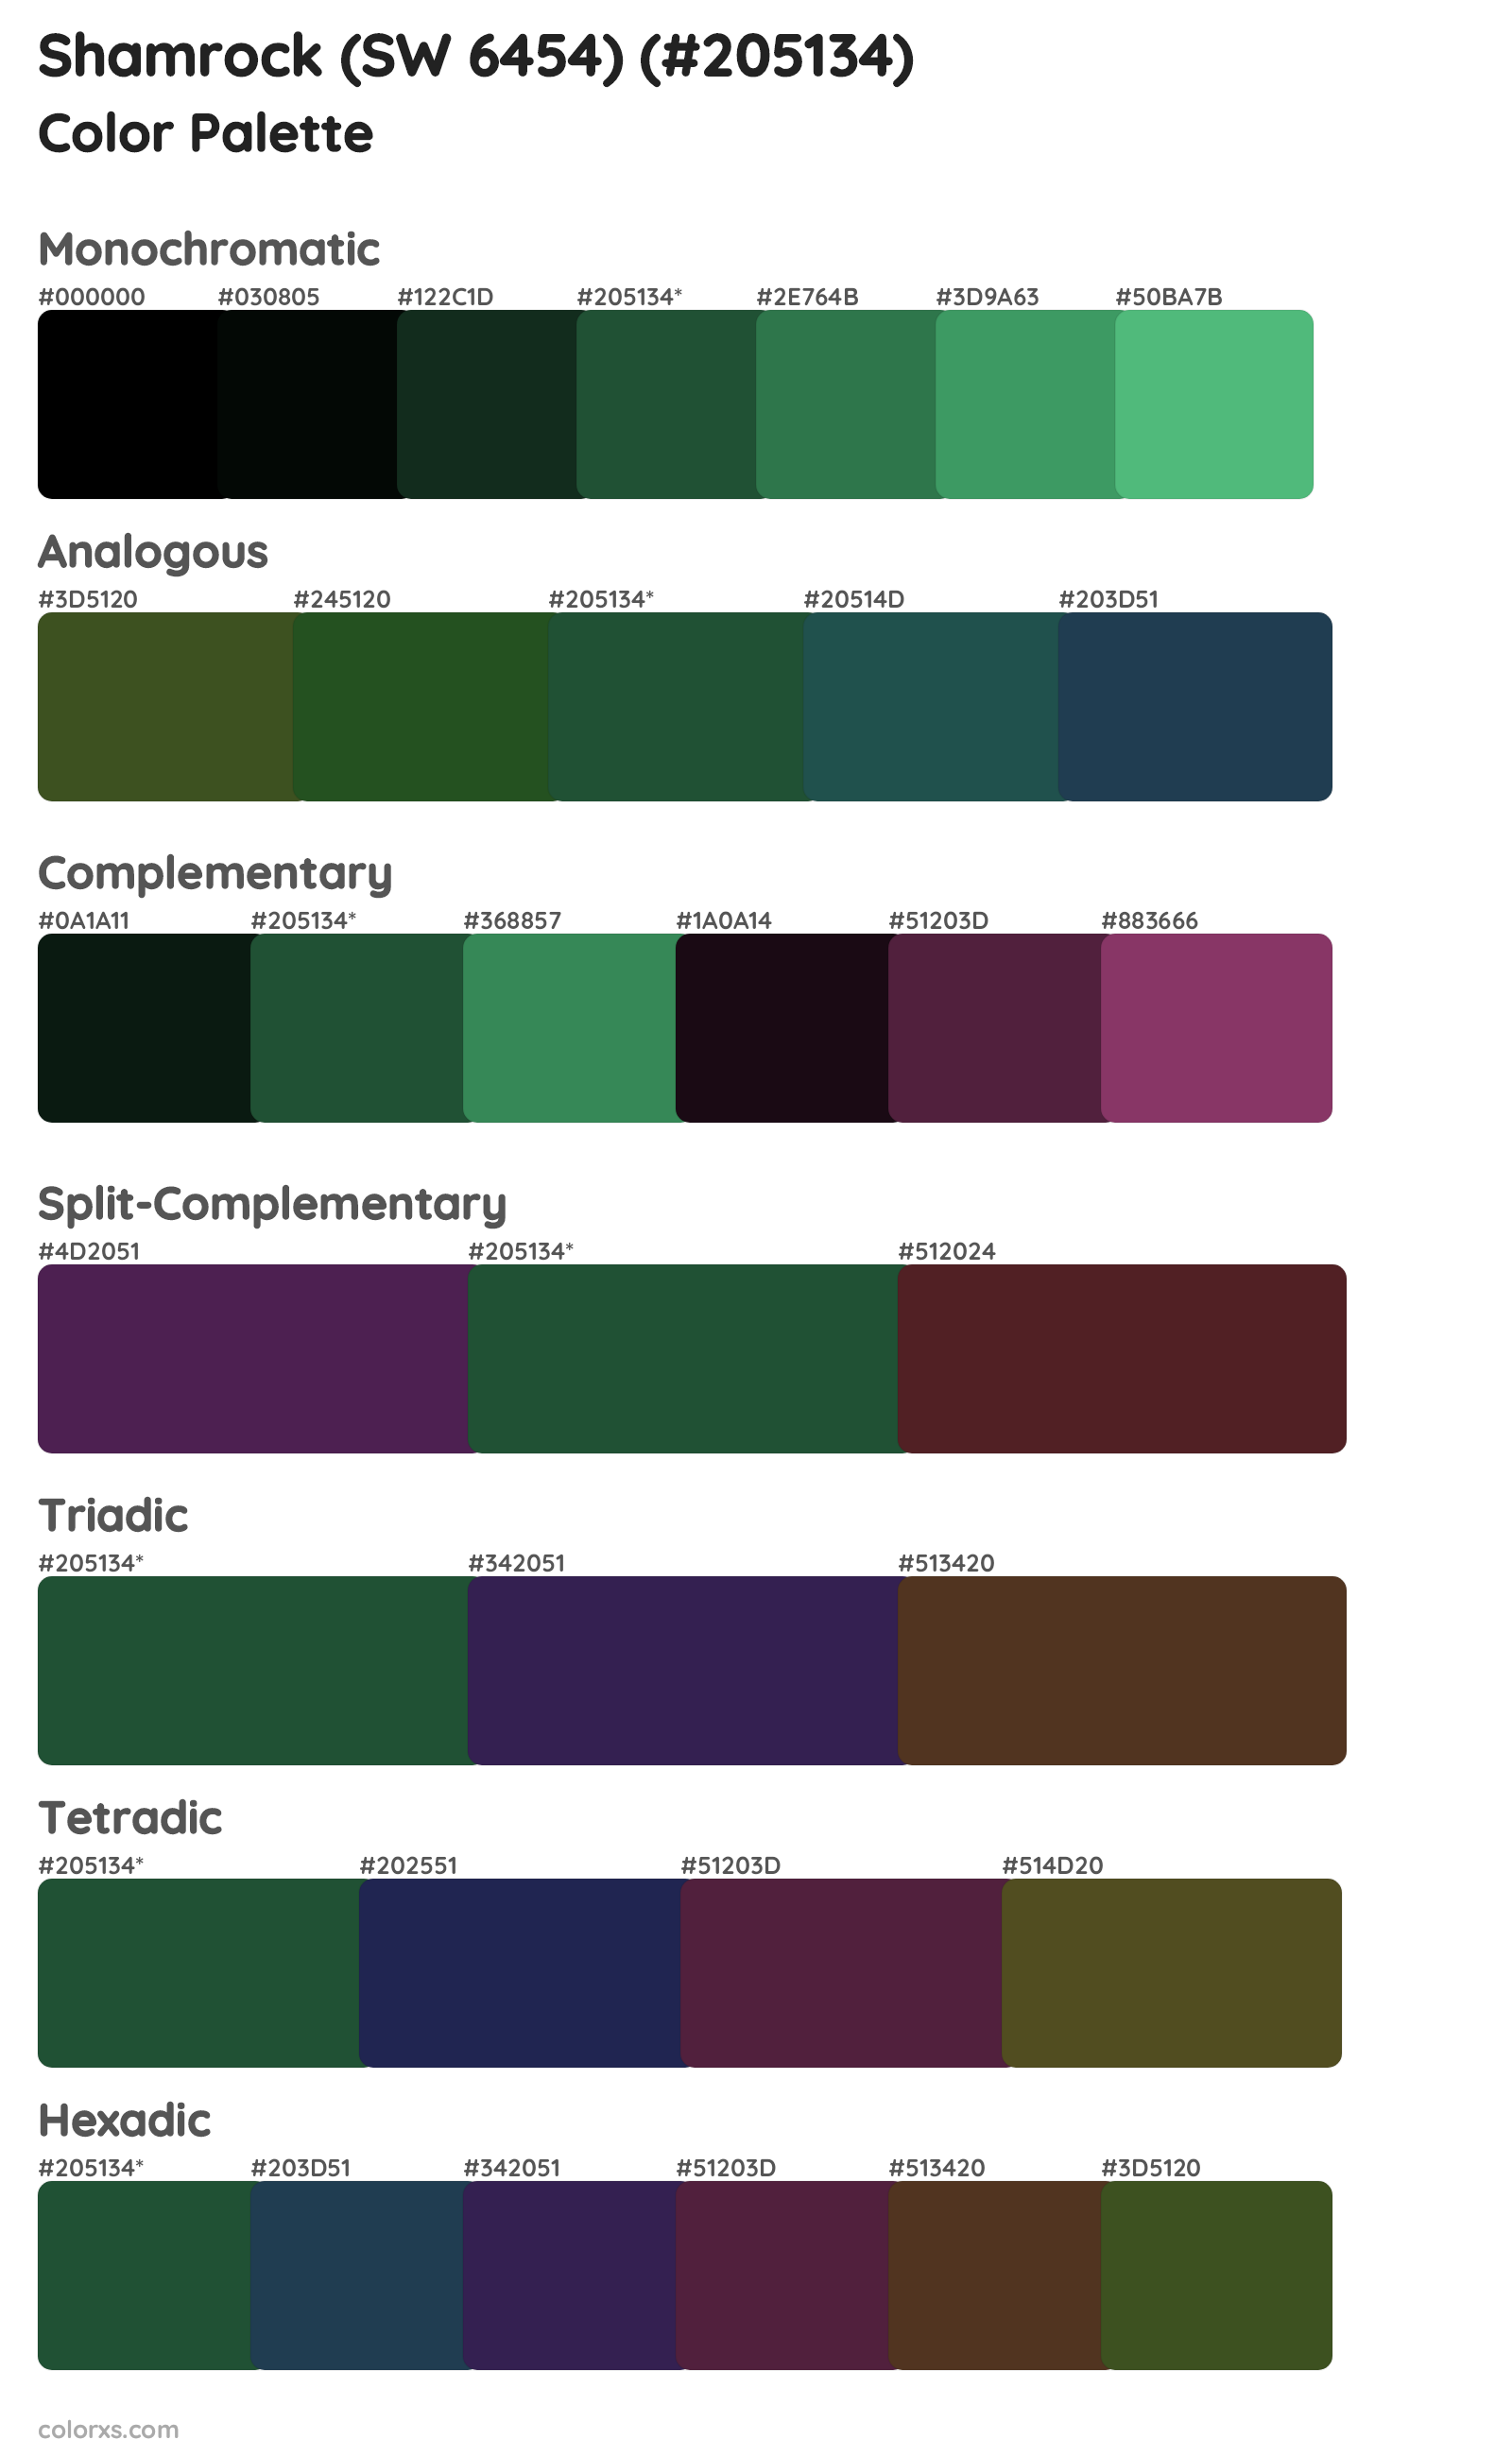 Shamrock (SW 6454) Color Scheme Palettes